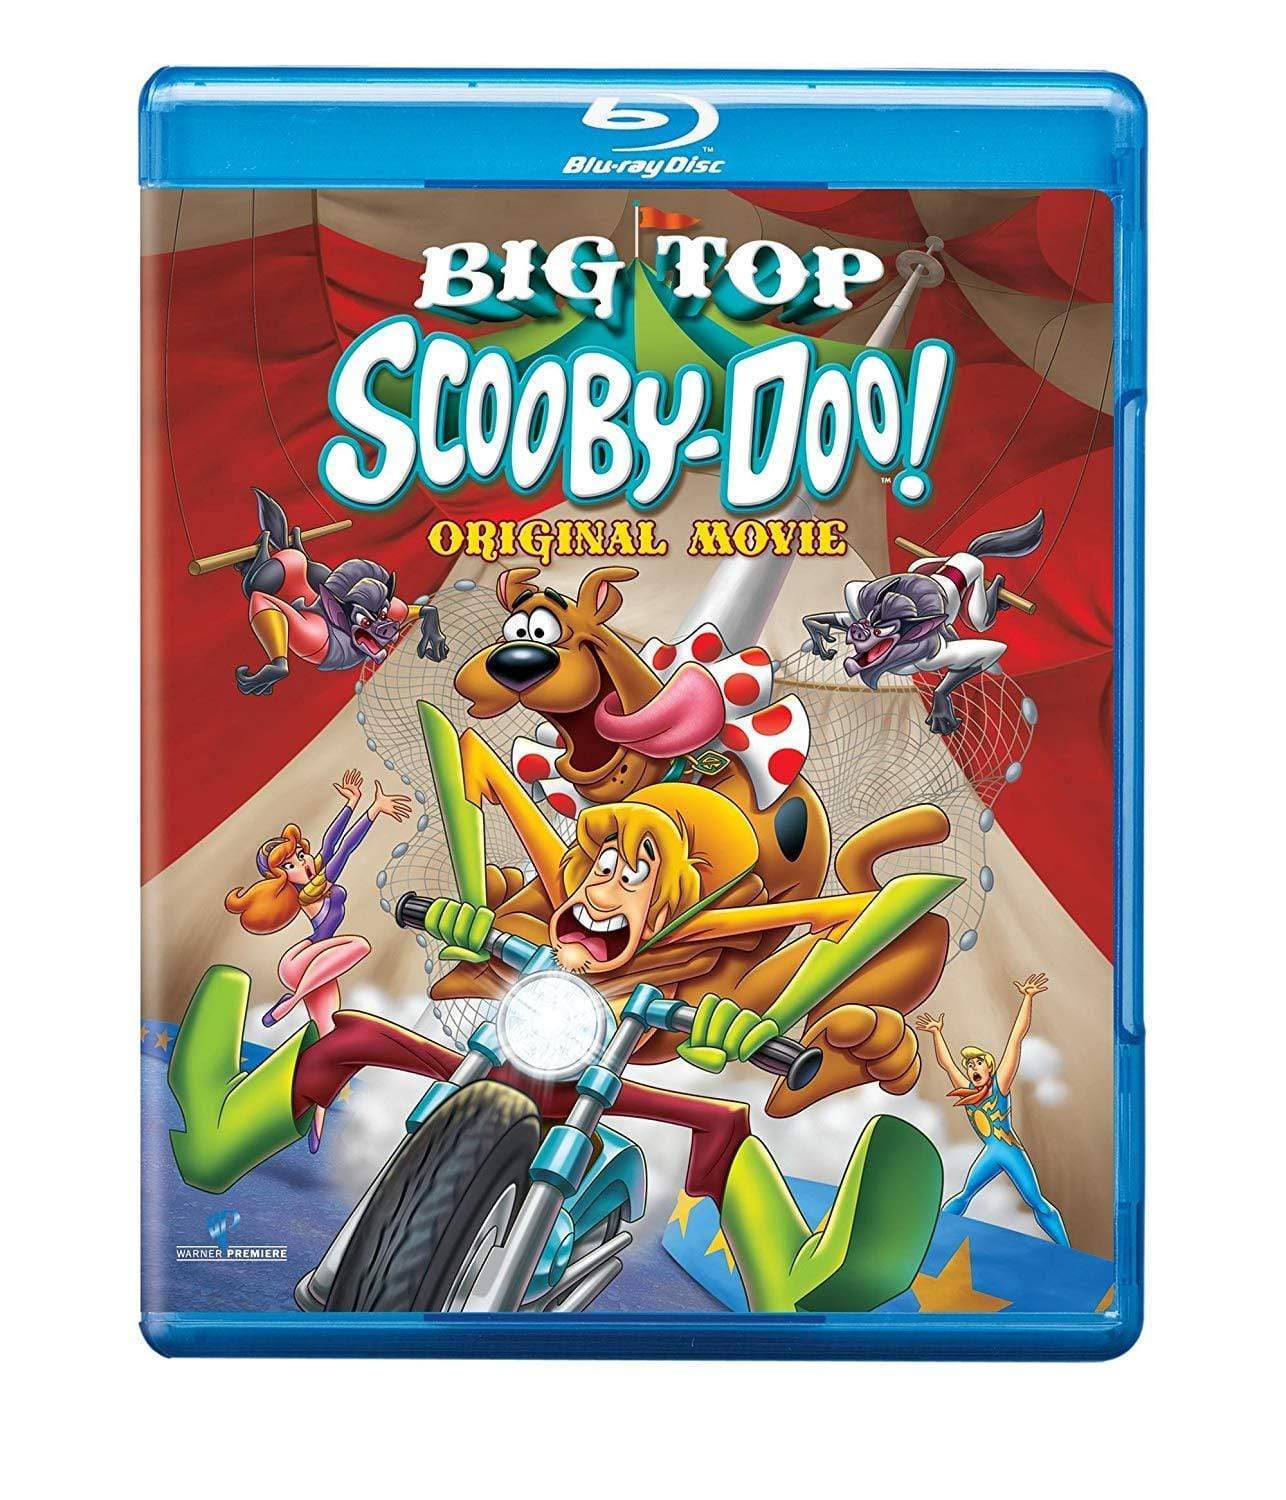 Big Top Scooby-Doo on Blu-Ray Blaze DVDs